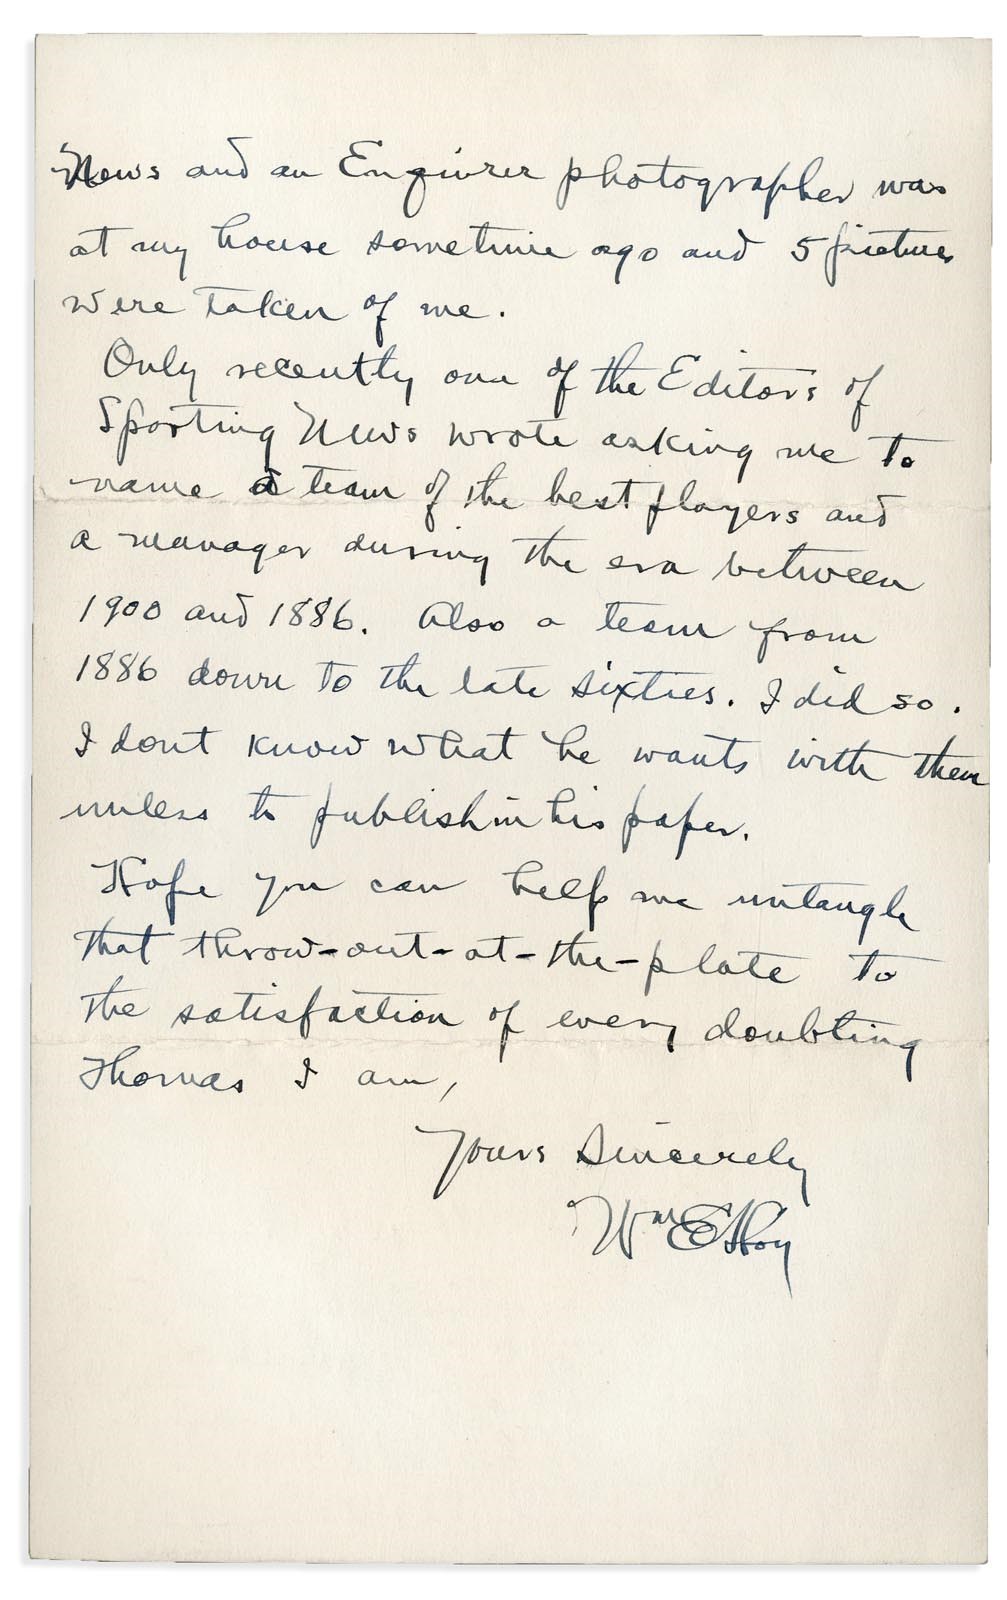 - 1943 Dummy Hoy Handwritten "Three Men Out" Letter (PSA)